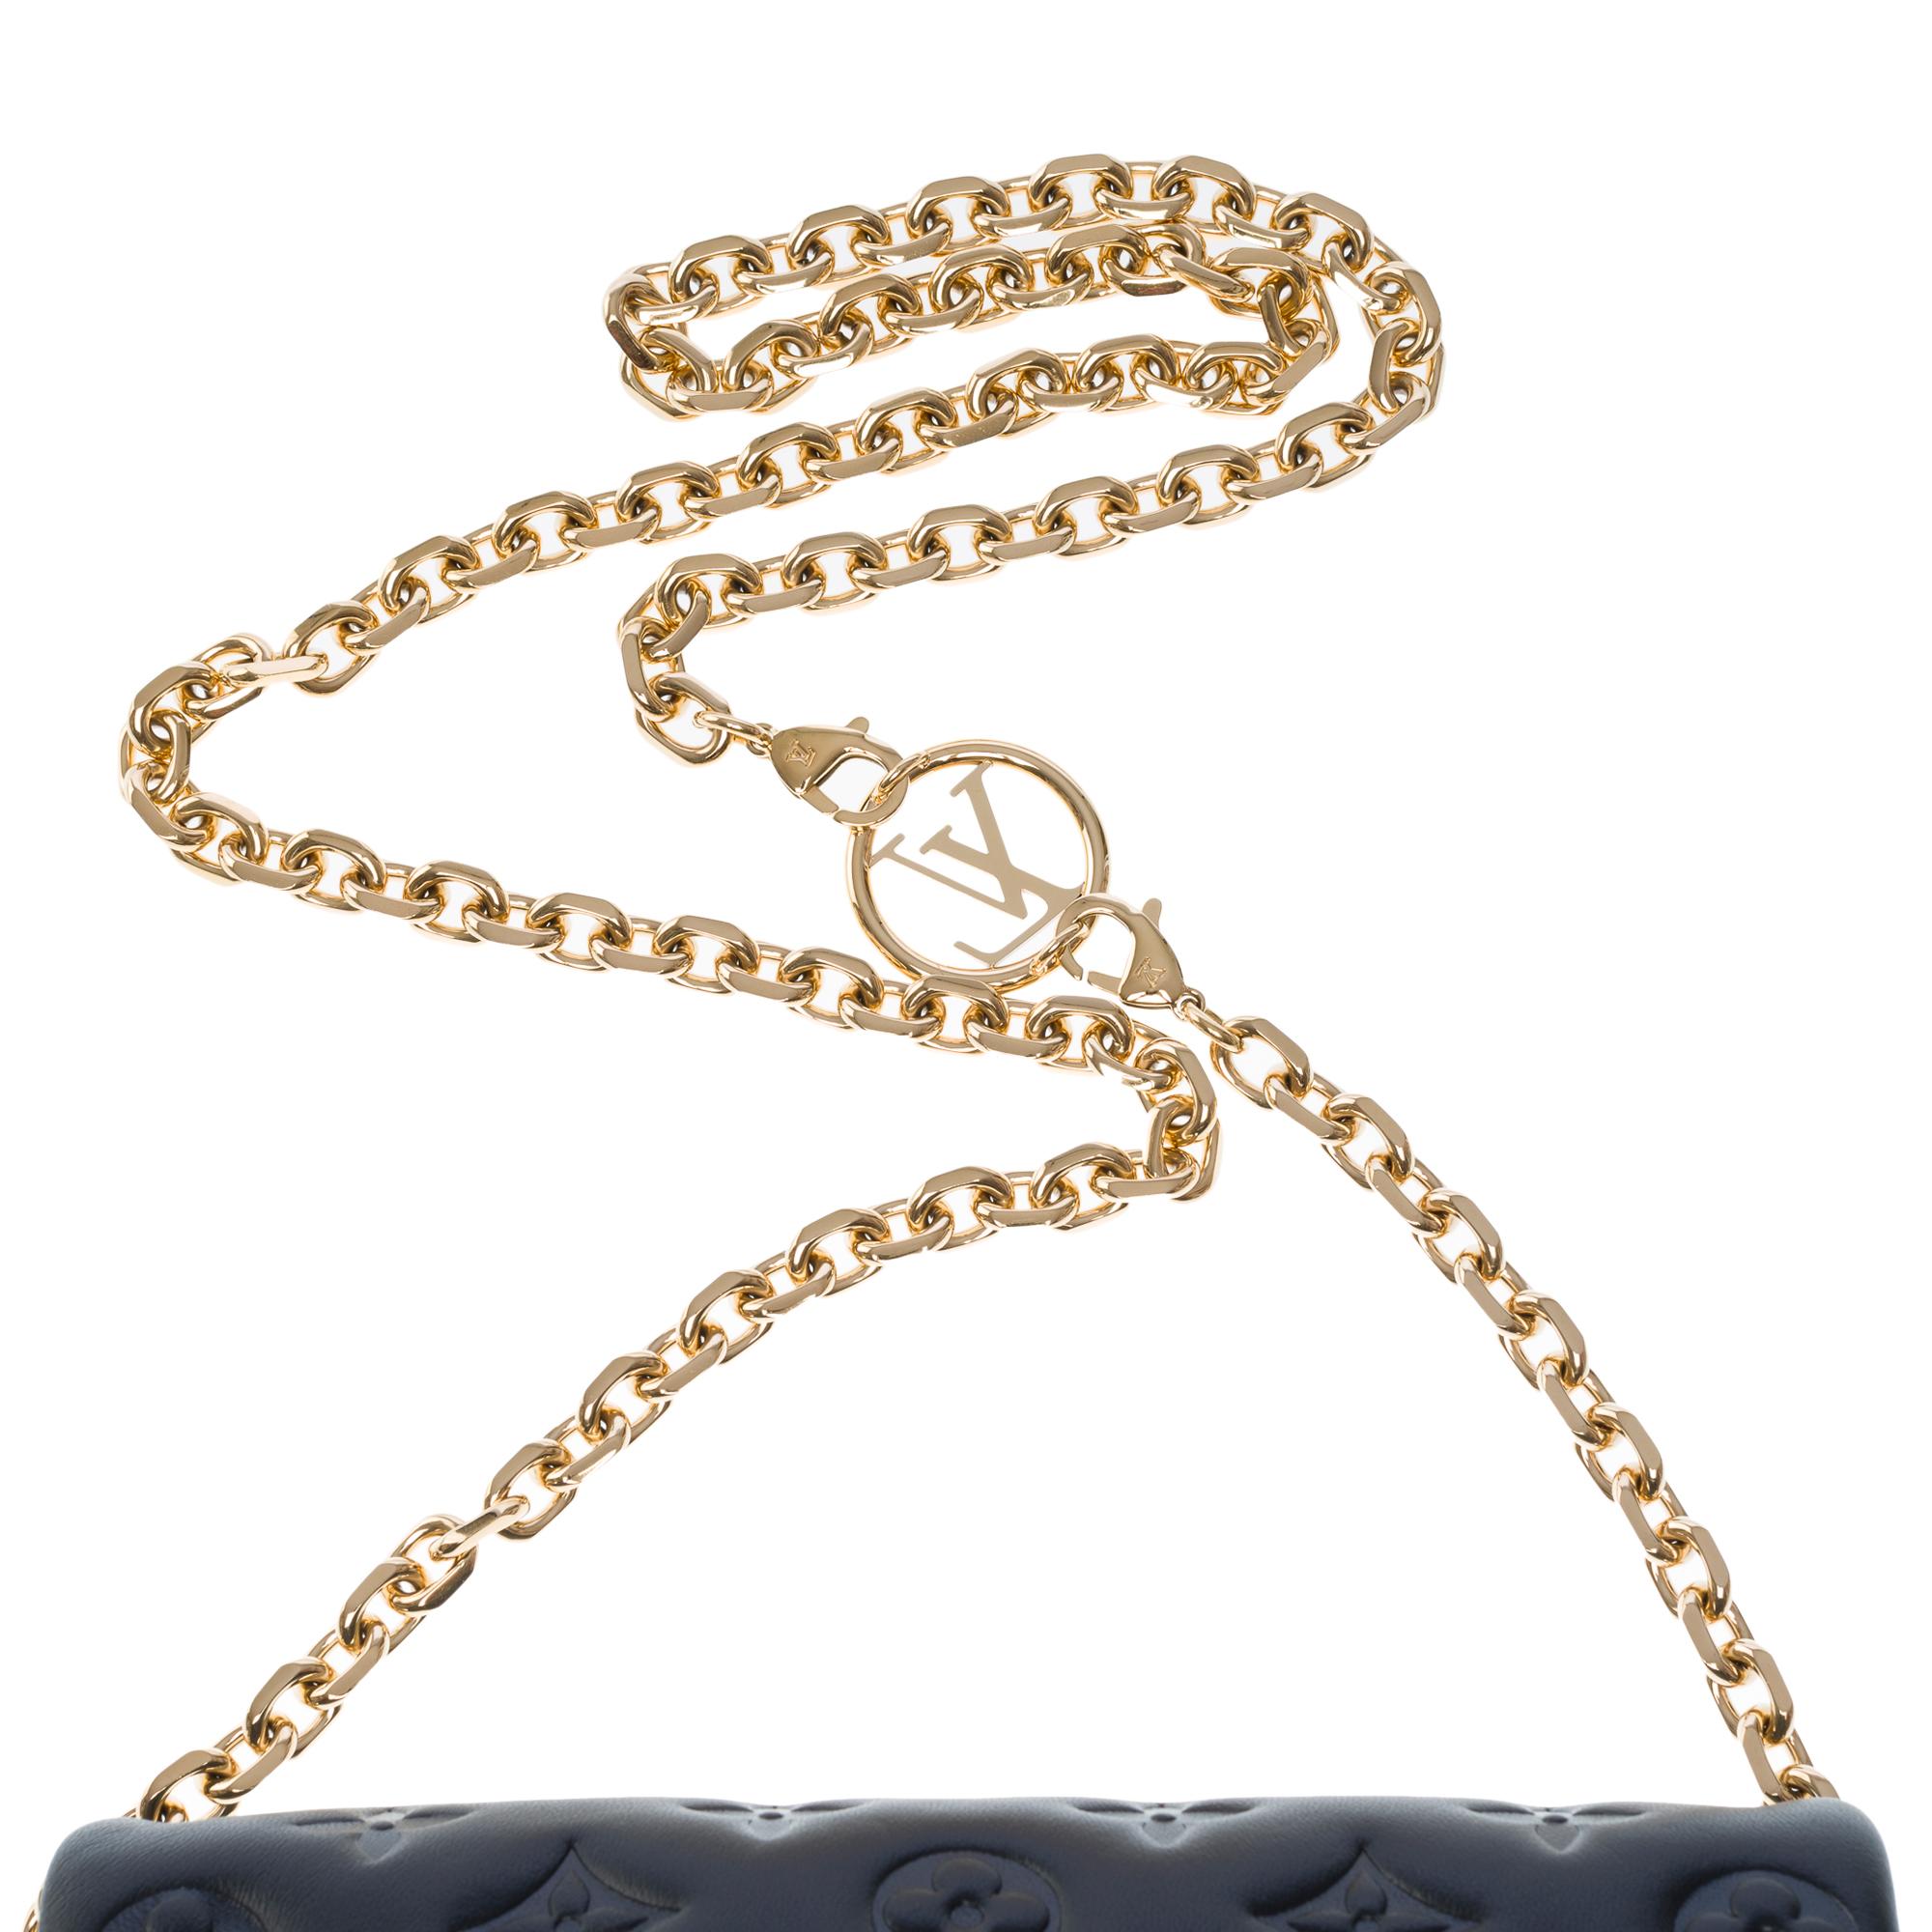 Louis Vuitton Cushion shoulder bag in black embossed monogram lambskin, GHW 5